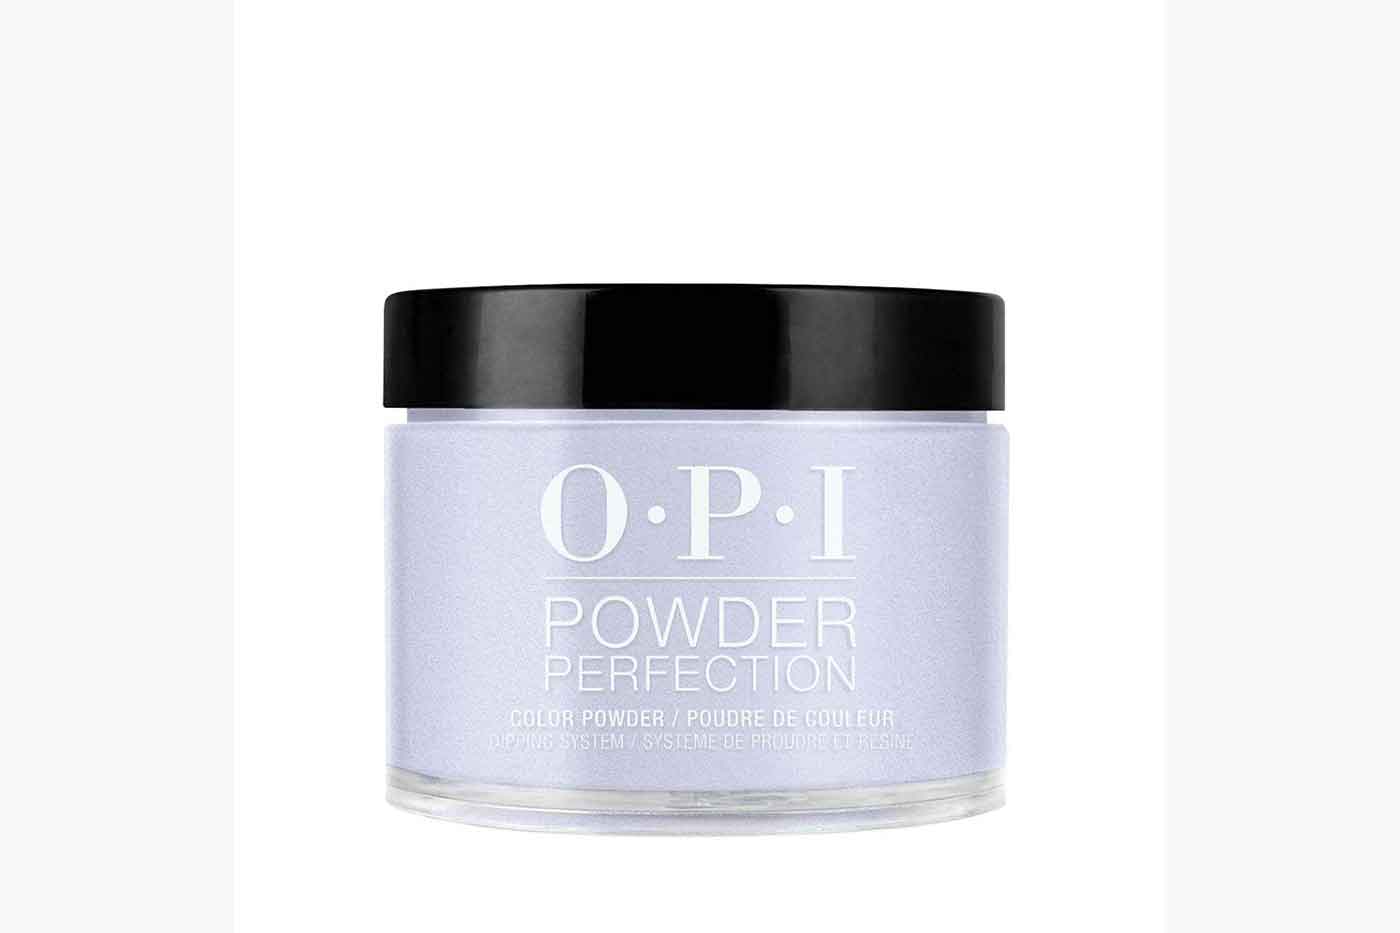 OPI’s Powder Perfection Dipping Powder